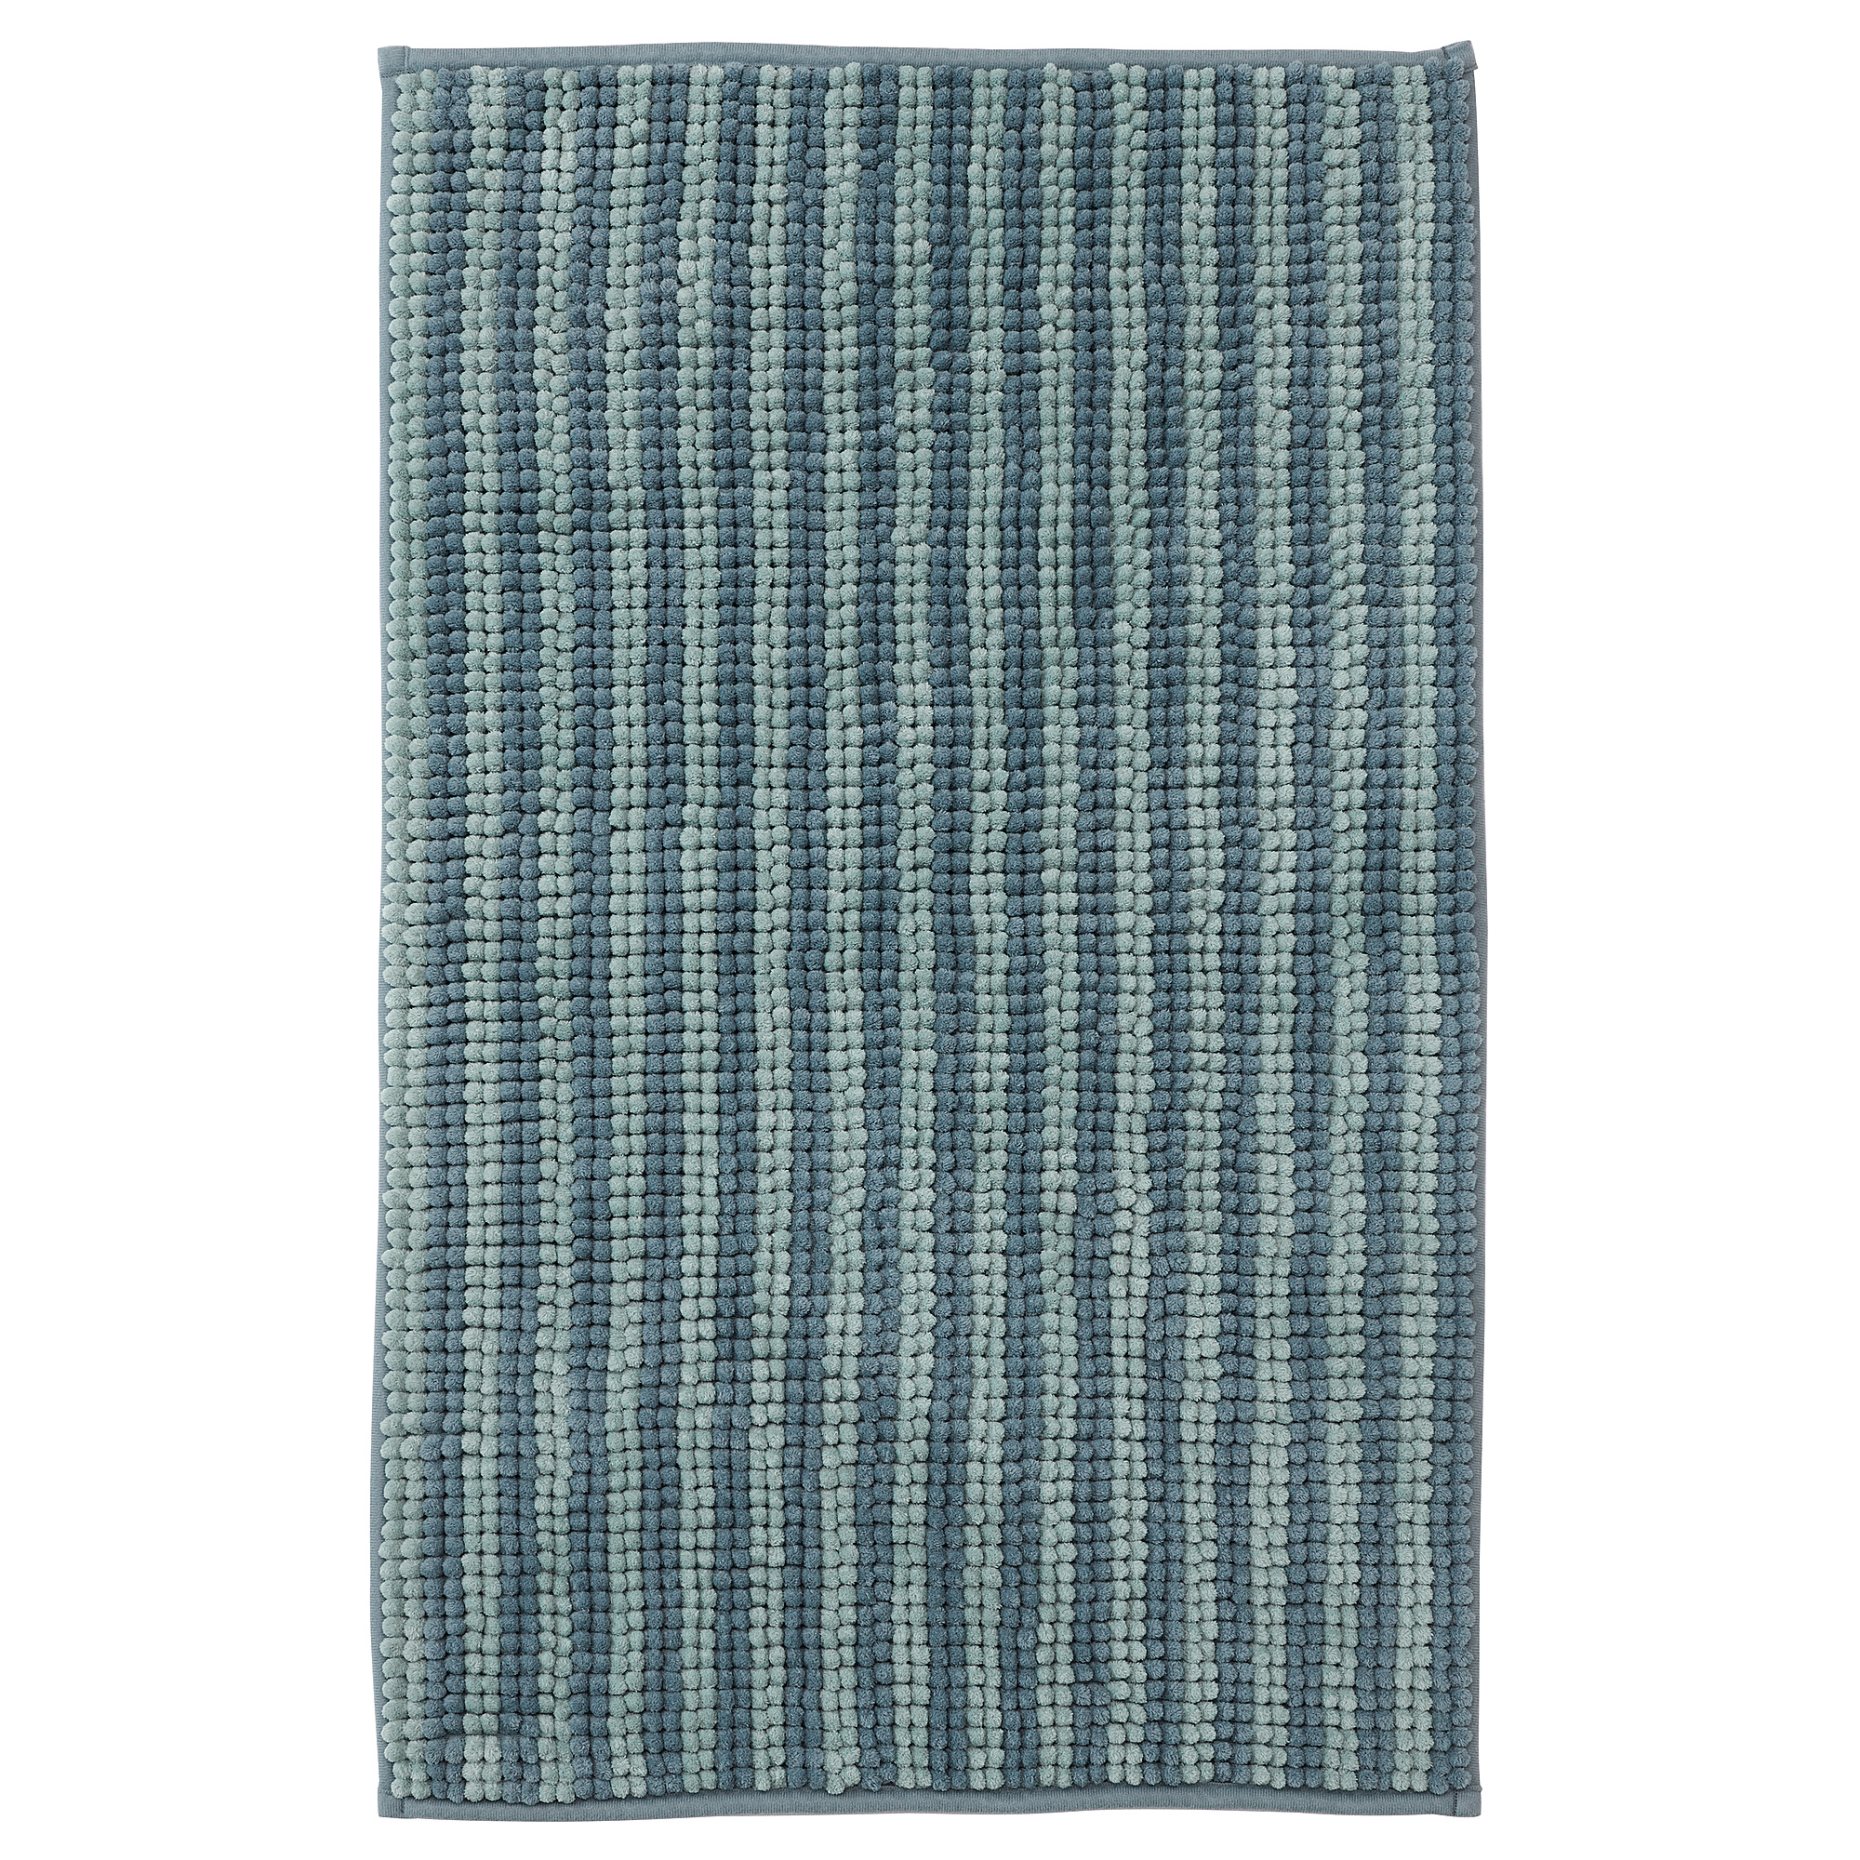 TOFTBO, bath mat/striped, 50x80 cm, 605.265.37